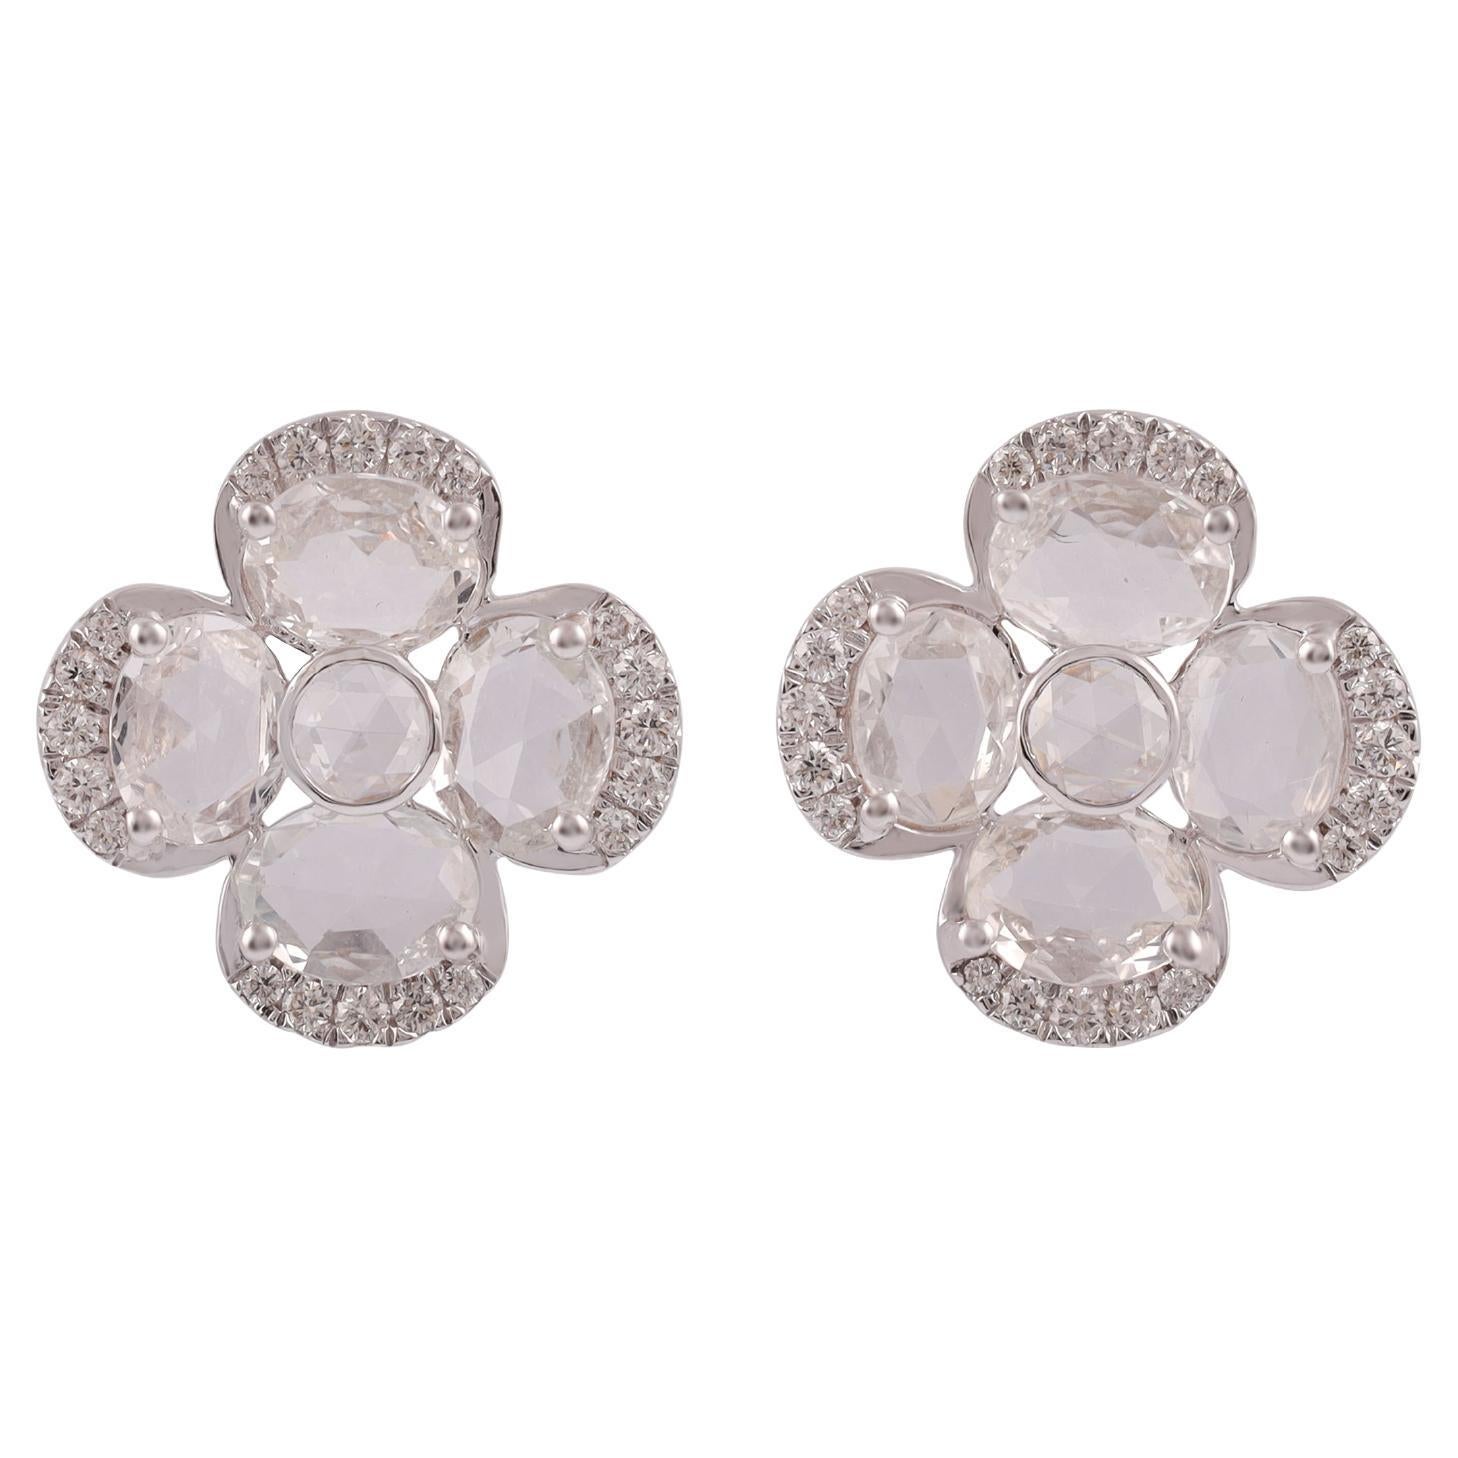 2.26 Carat White Sapphire, Rose Cut & Round Diamond Earrings Studs